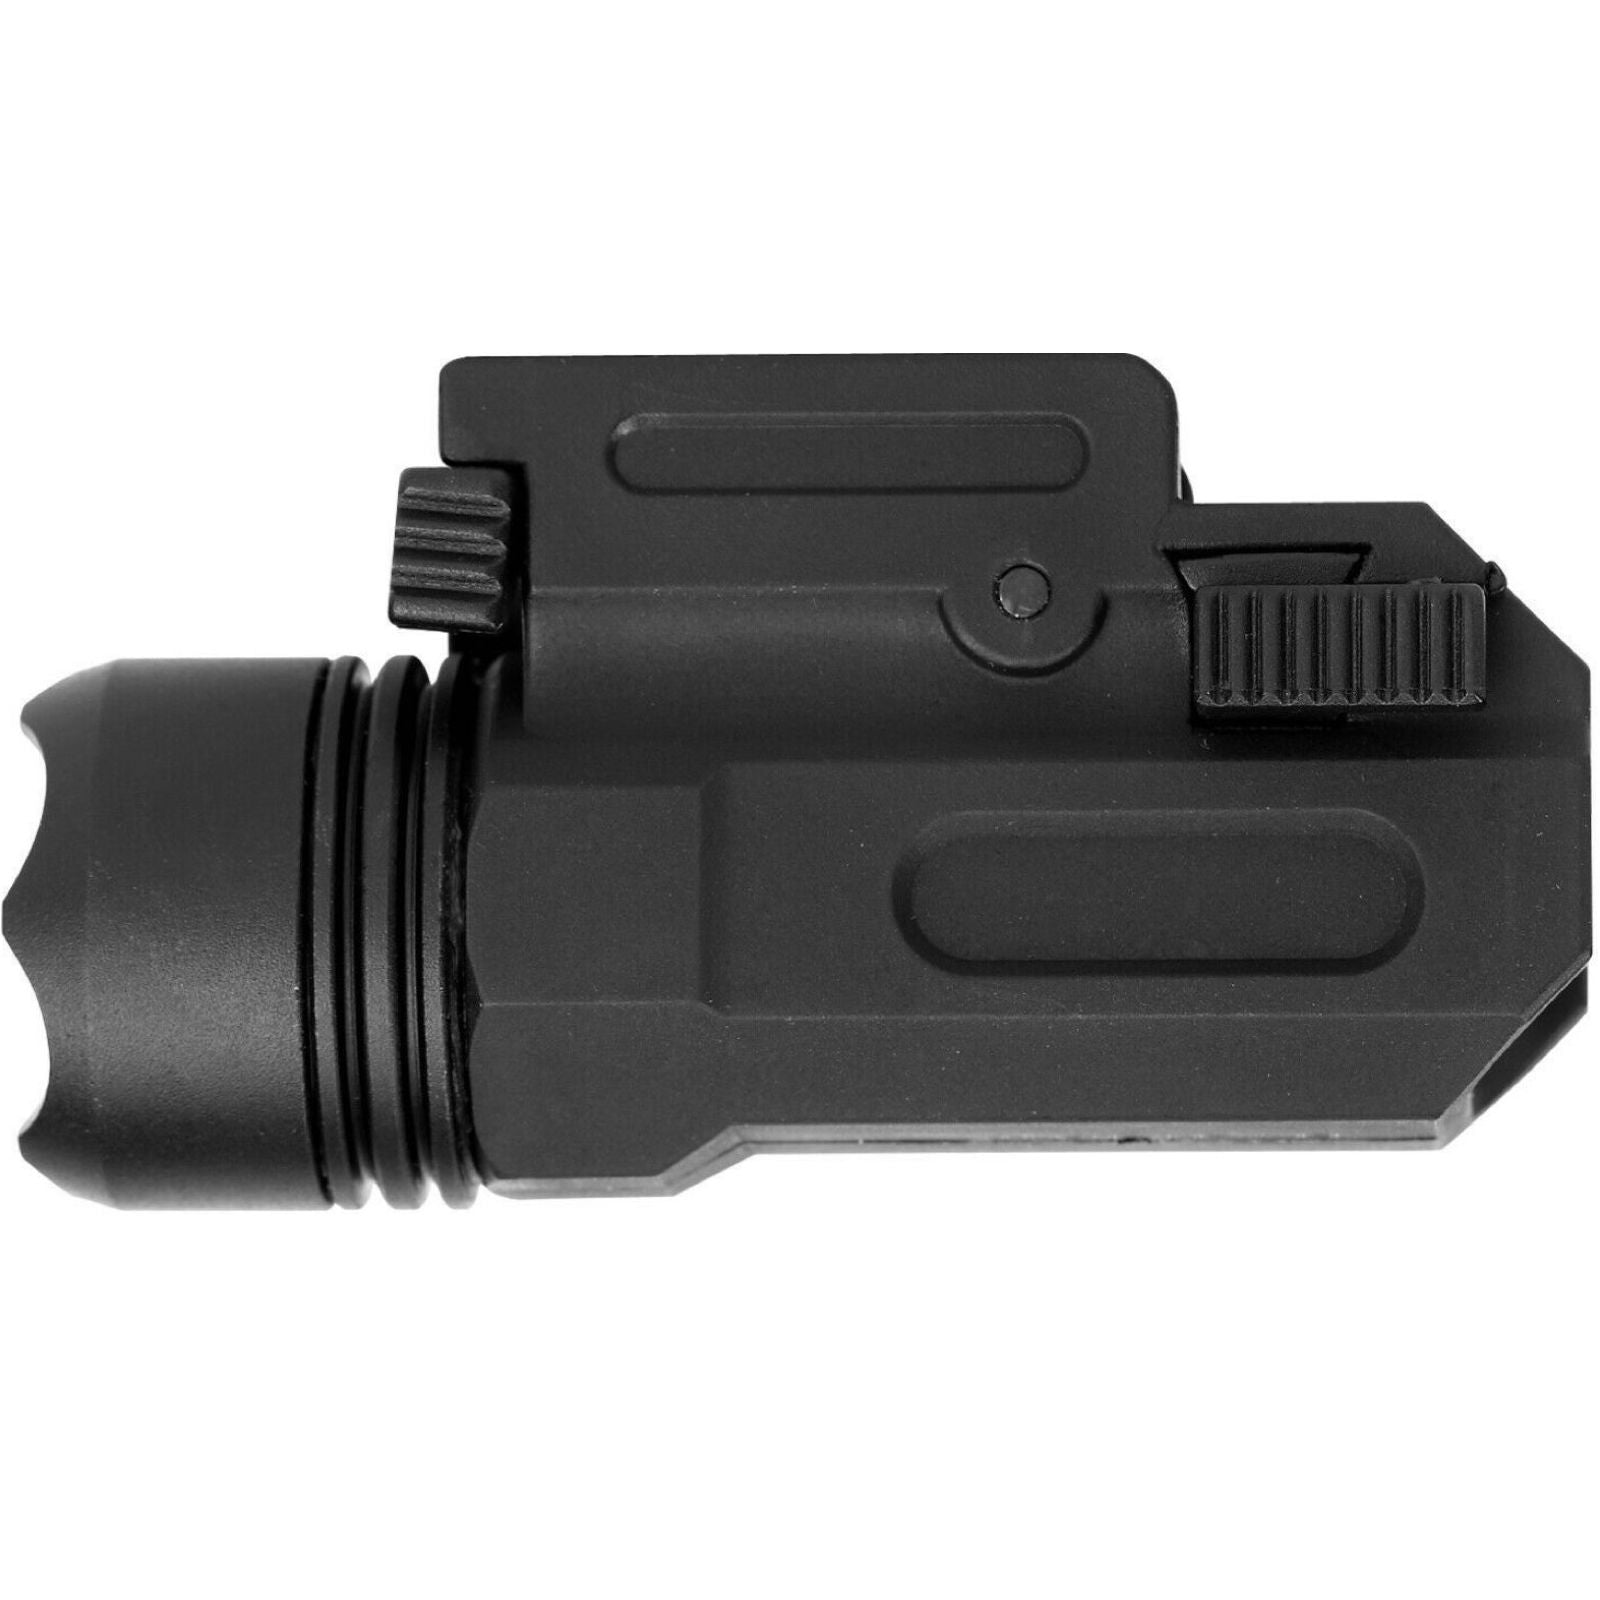 Sightmark T6 600 Lumen Flashlight Kit,Black,SM73009K 